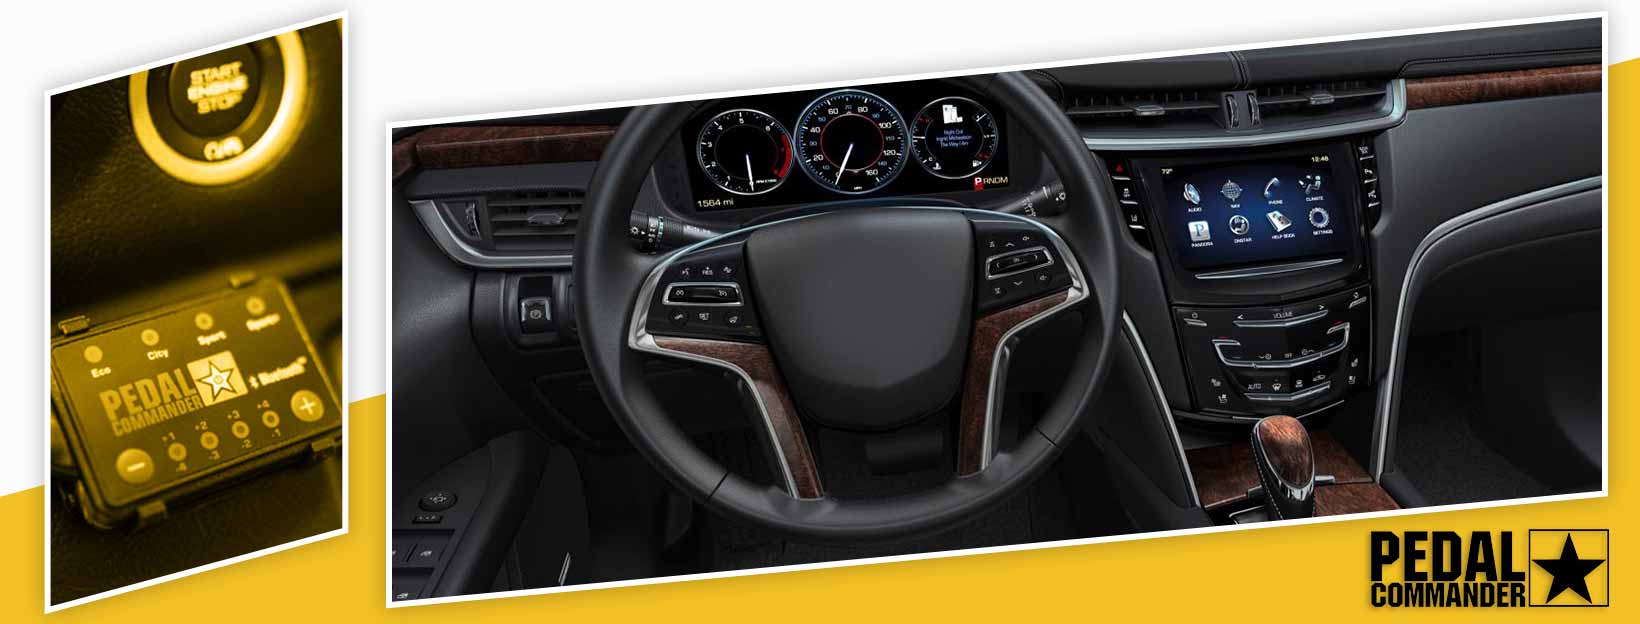 Pedal Commander for Cadillac XTS - interior